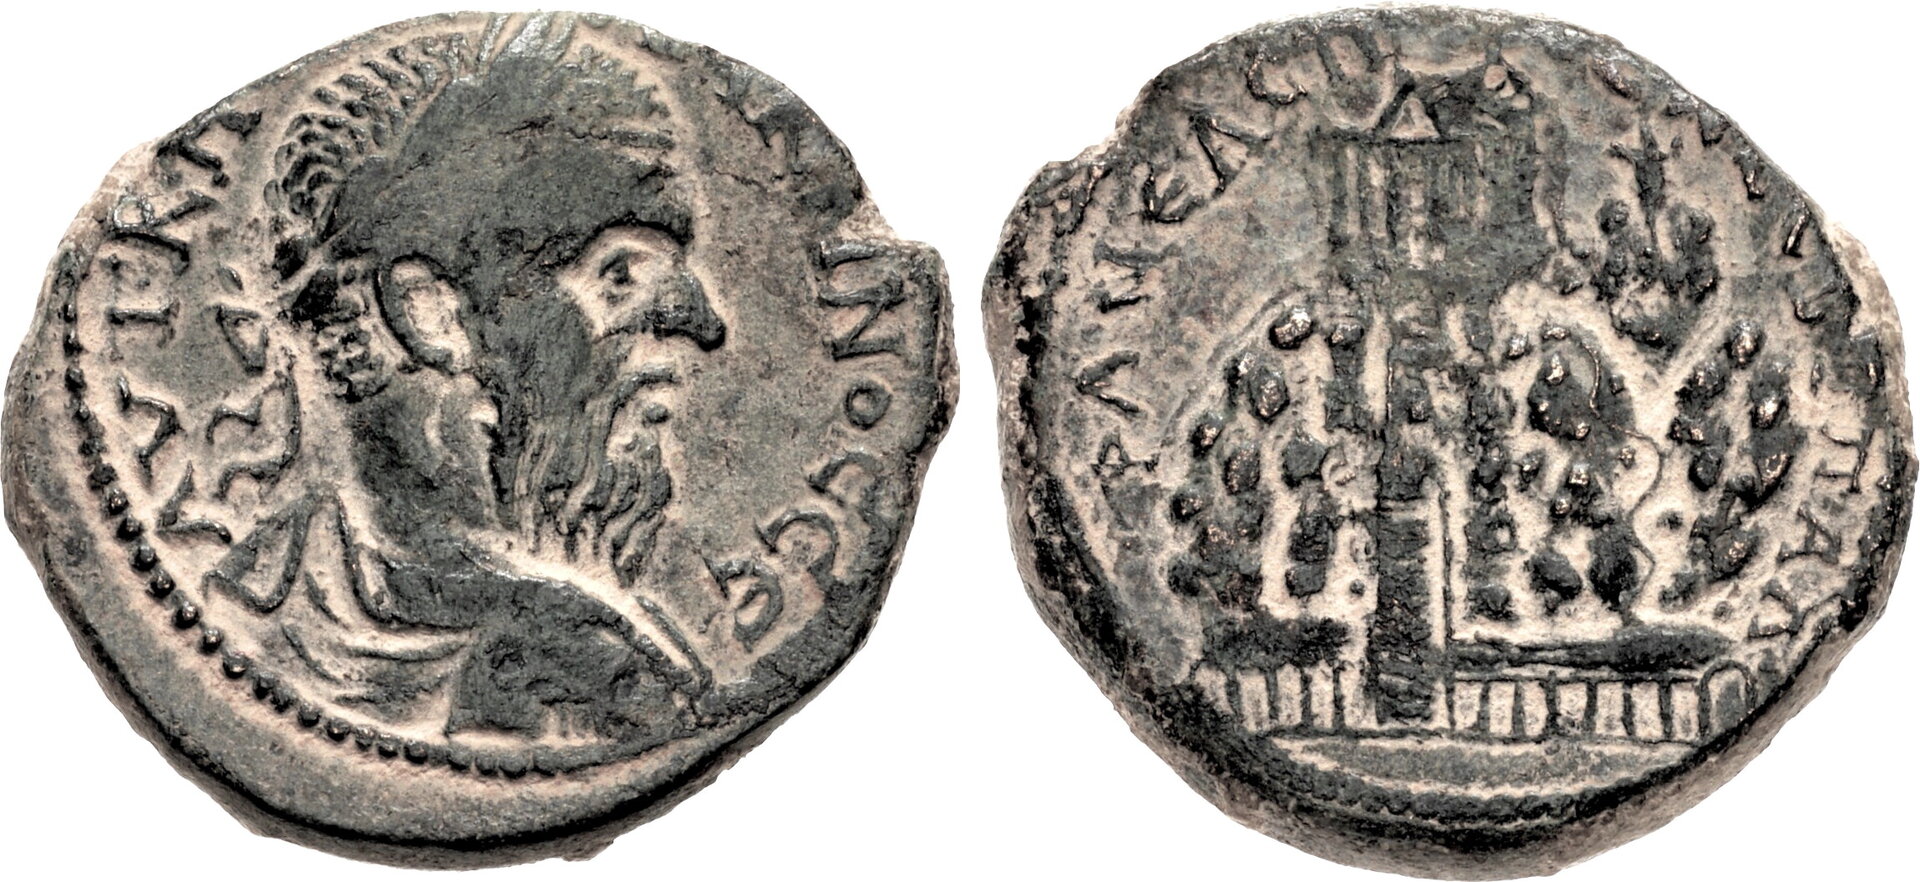 Judaea-Neapolis, Macrinus, AD 217-219, SNG ANS 993.jpg